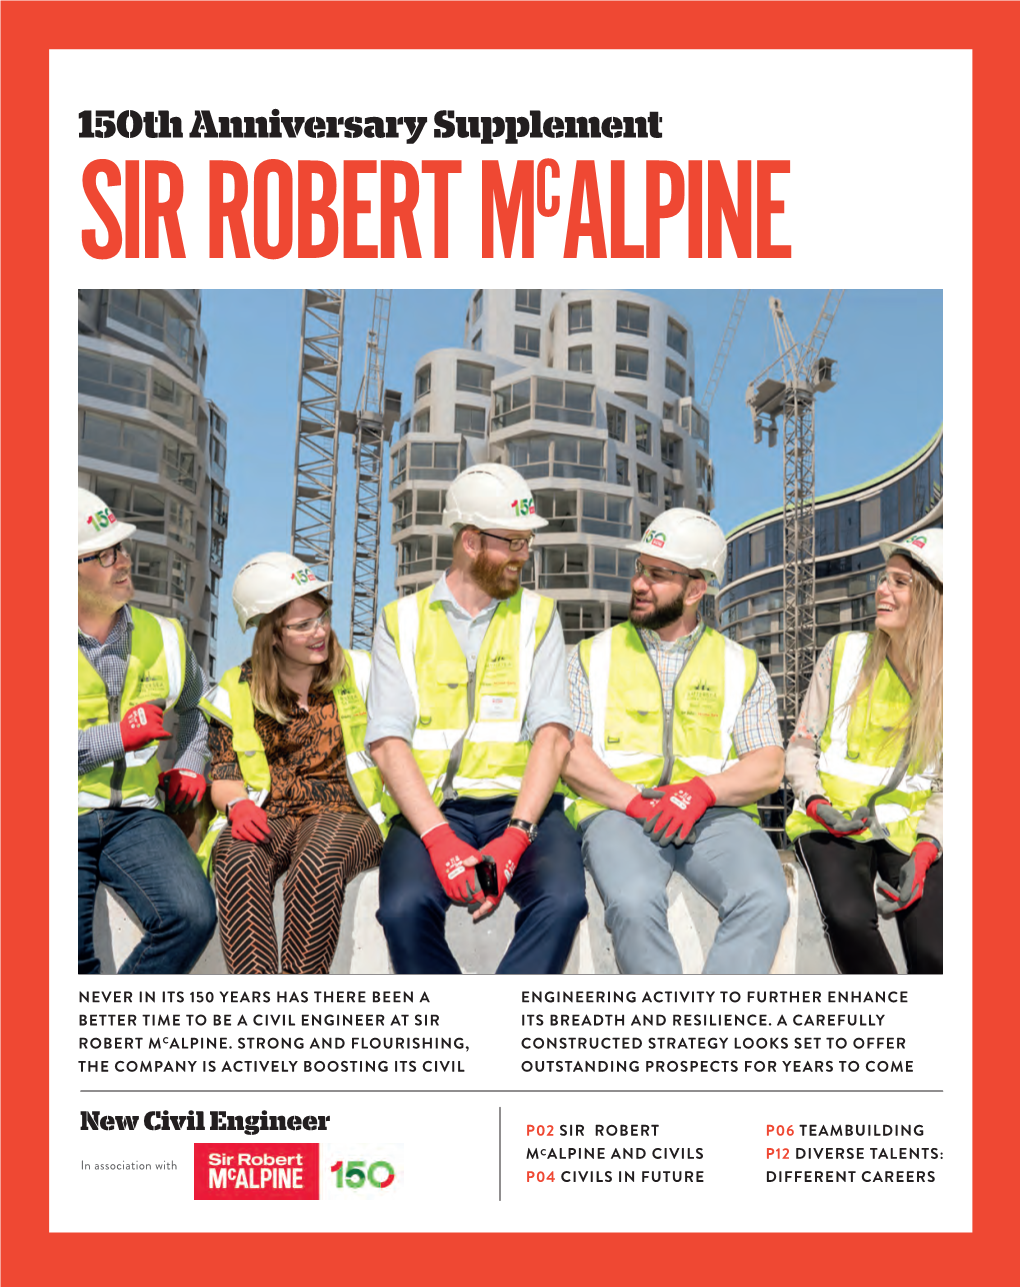 New Civil Engineer in Association with Sir Robert Mcalpine | December 2019